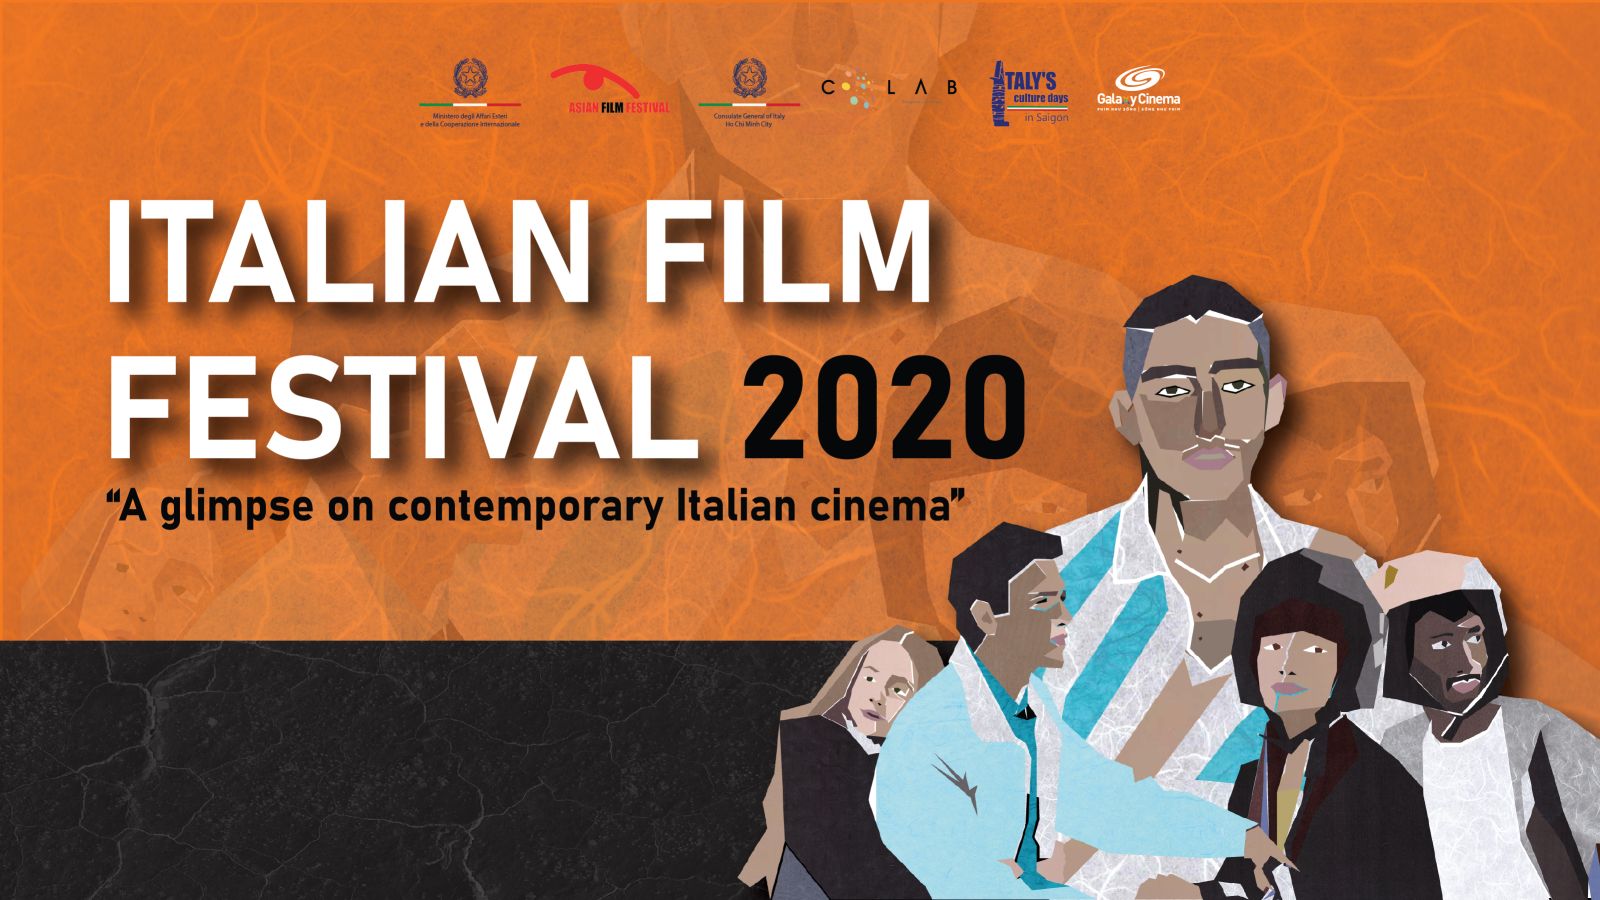 ITALIAN FILM FESTIVAL 2020